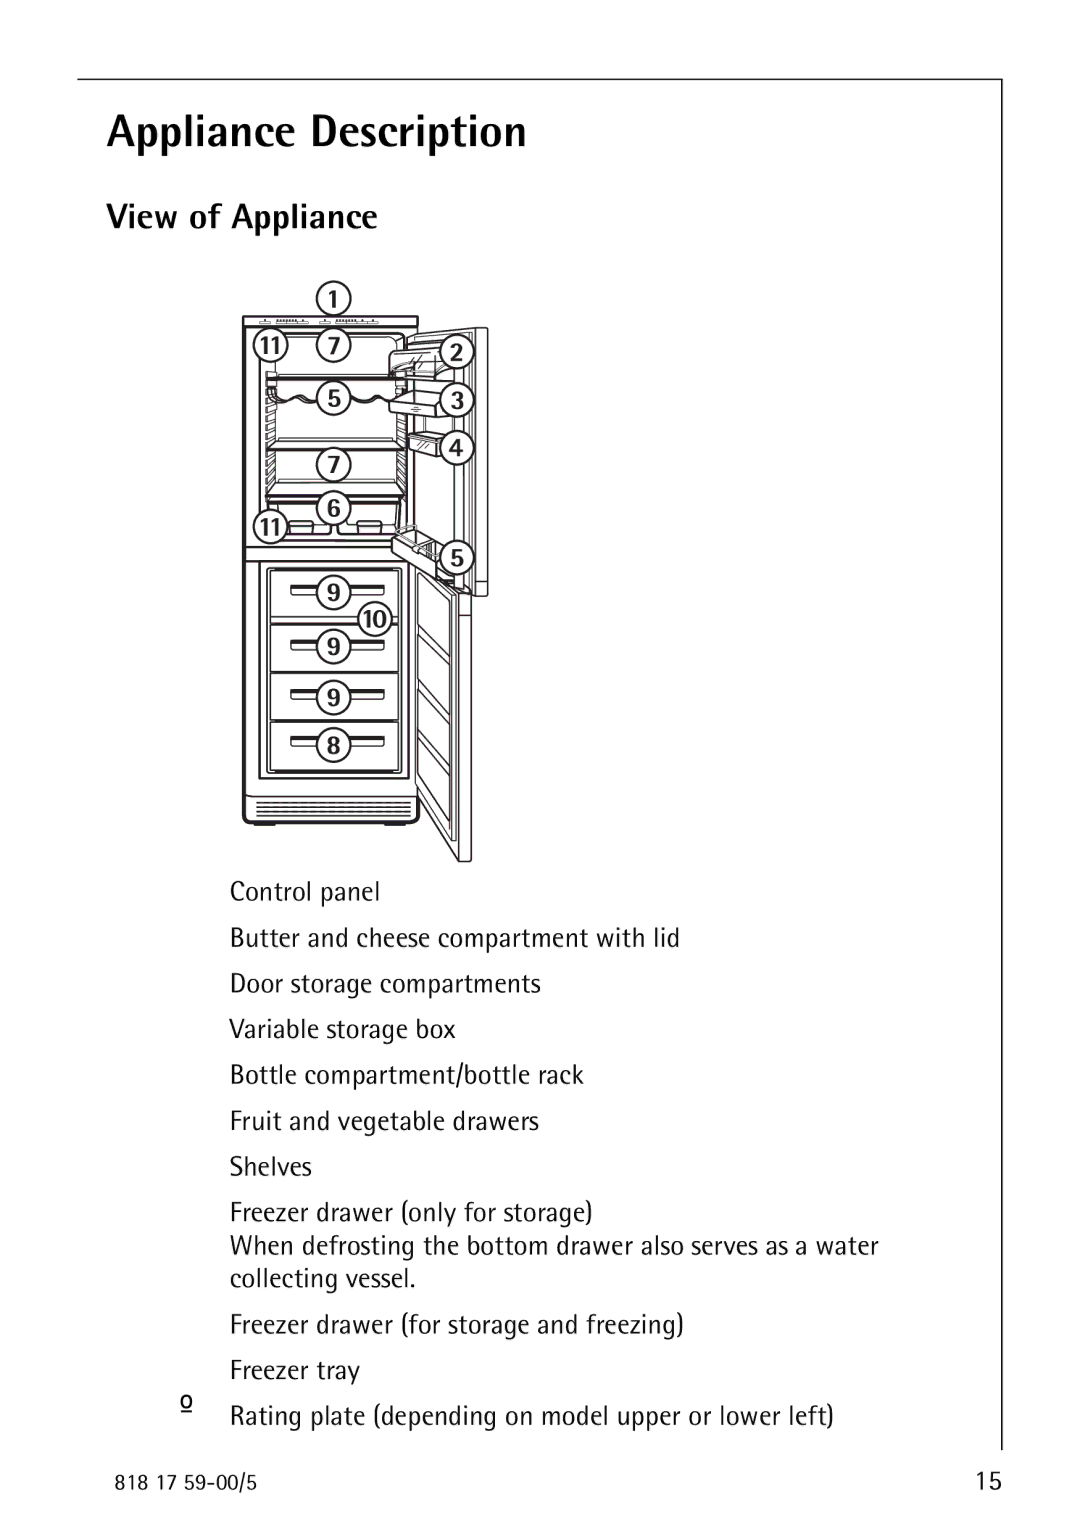 AEG 3150-7 KG manual Appliance Description, View of Appliance 